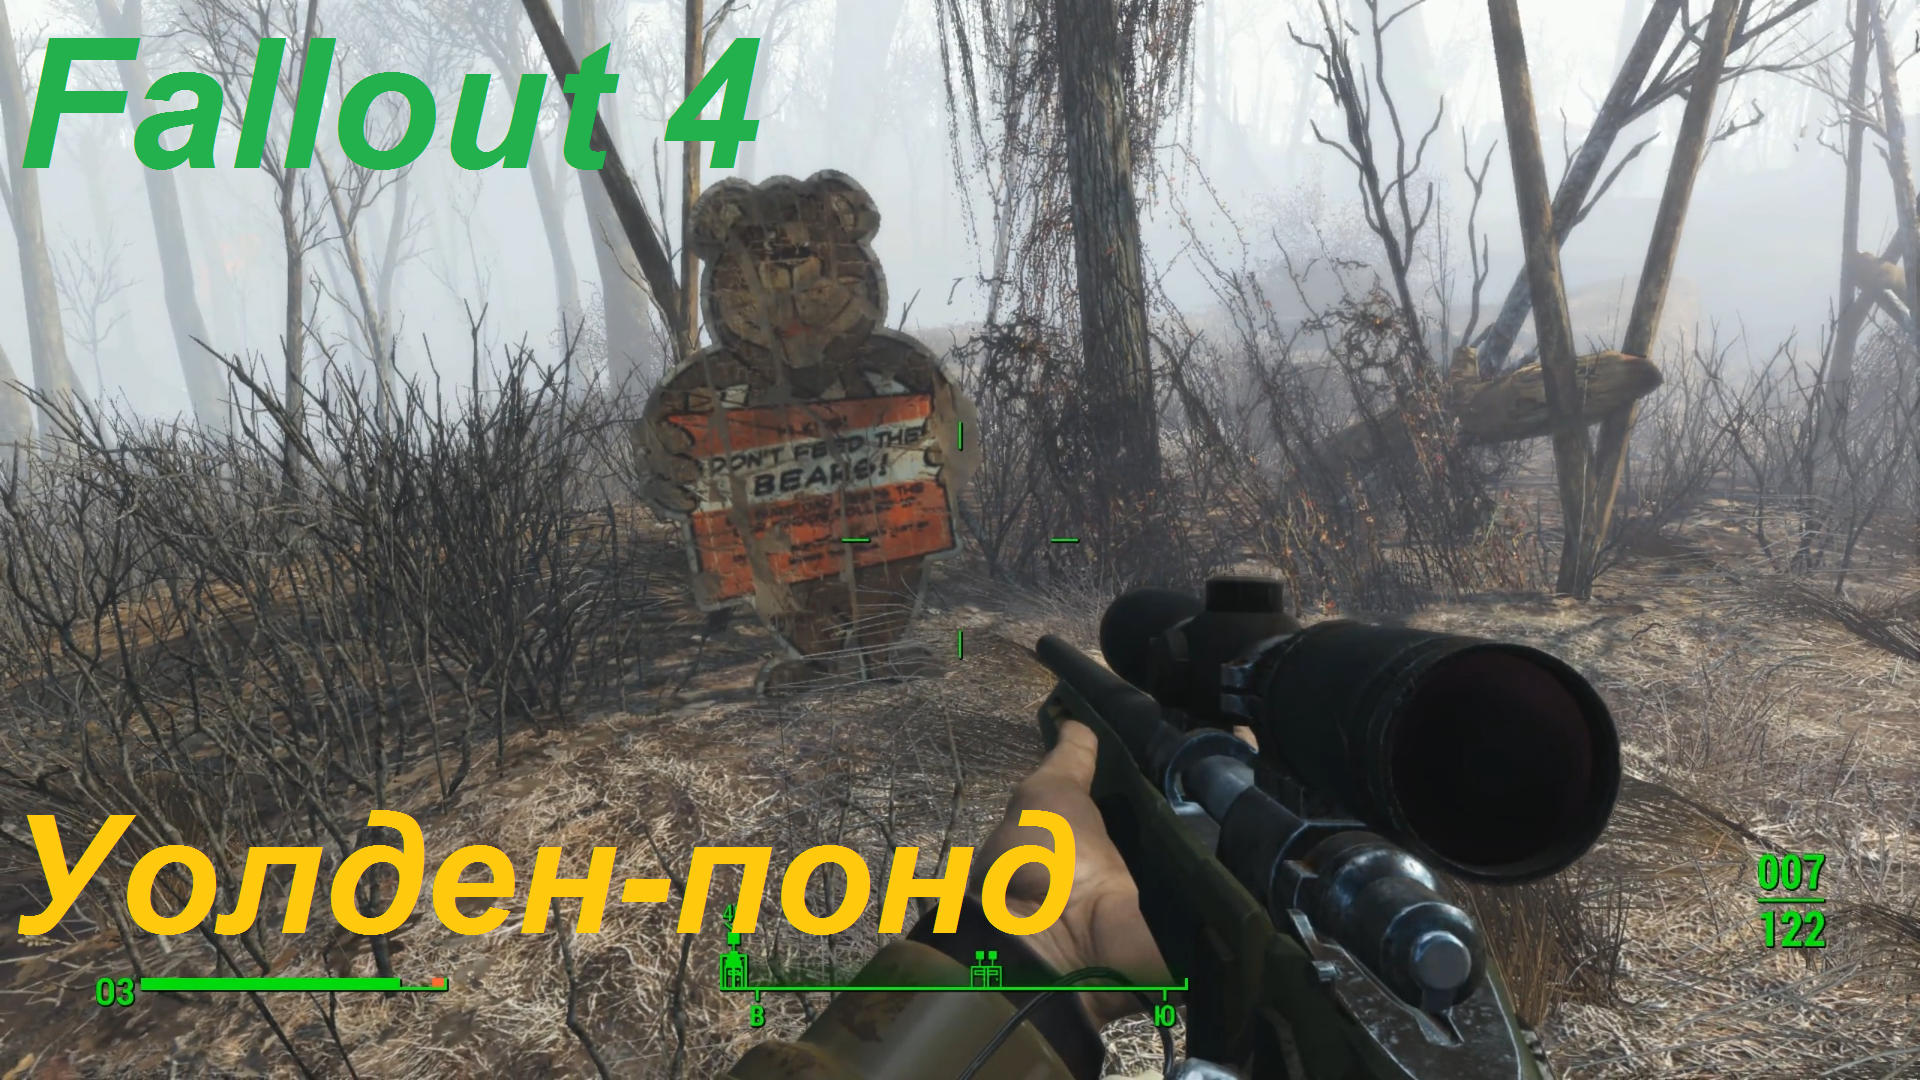 Fallout 4 - местечко Уолден-понд в Содружестве